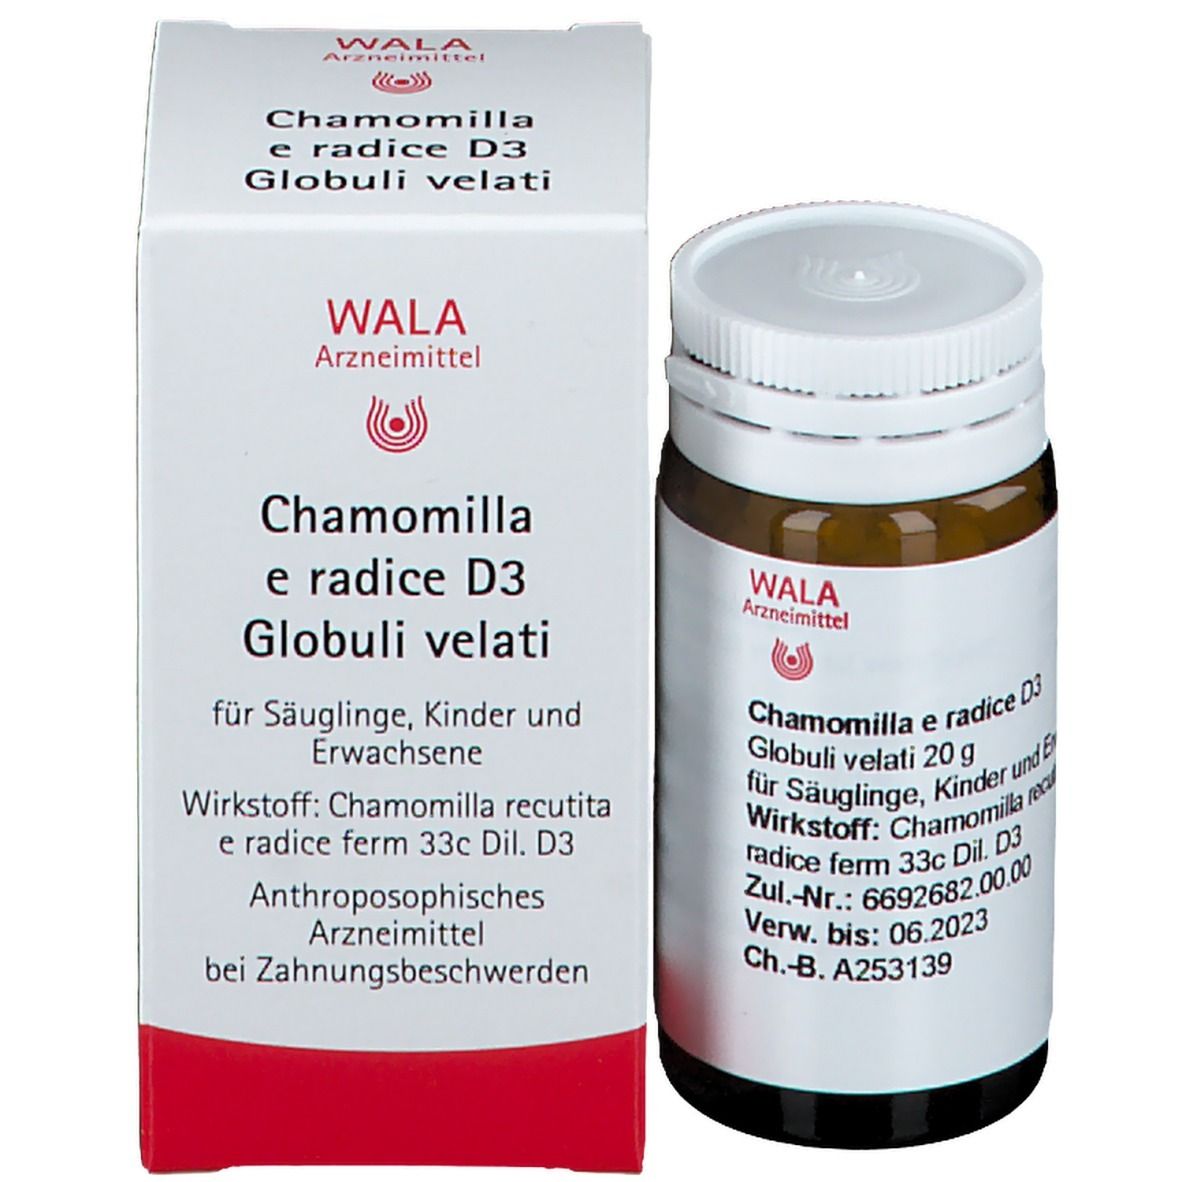 WALA® Chamomilla e radice D 3 Globuli